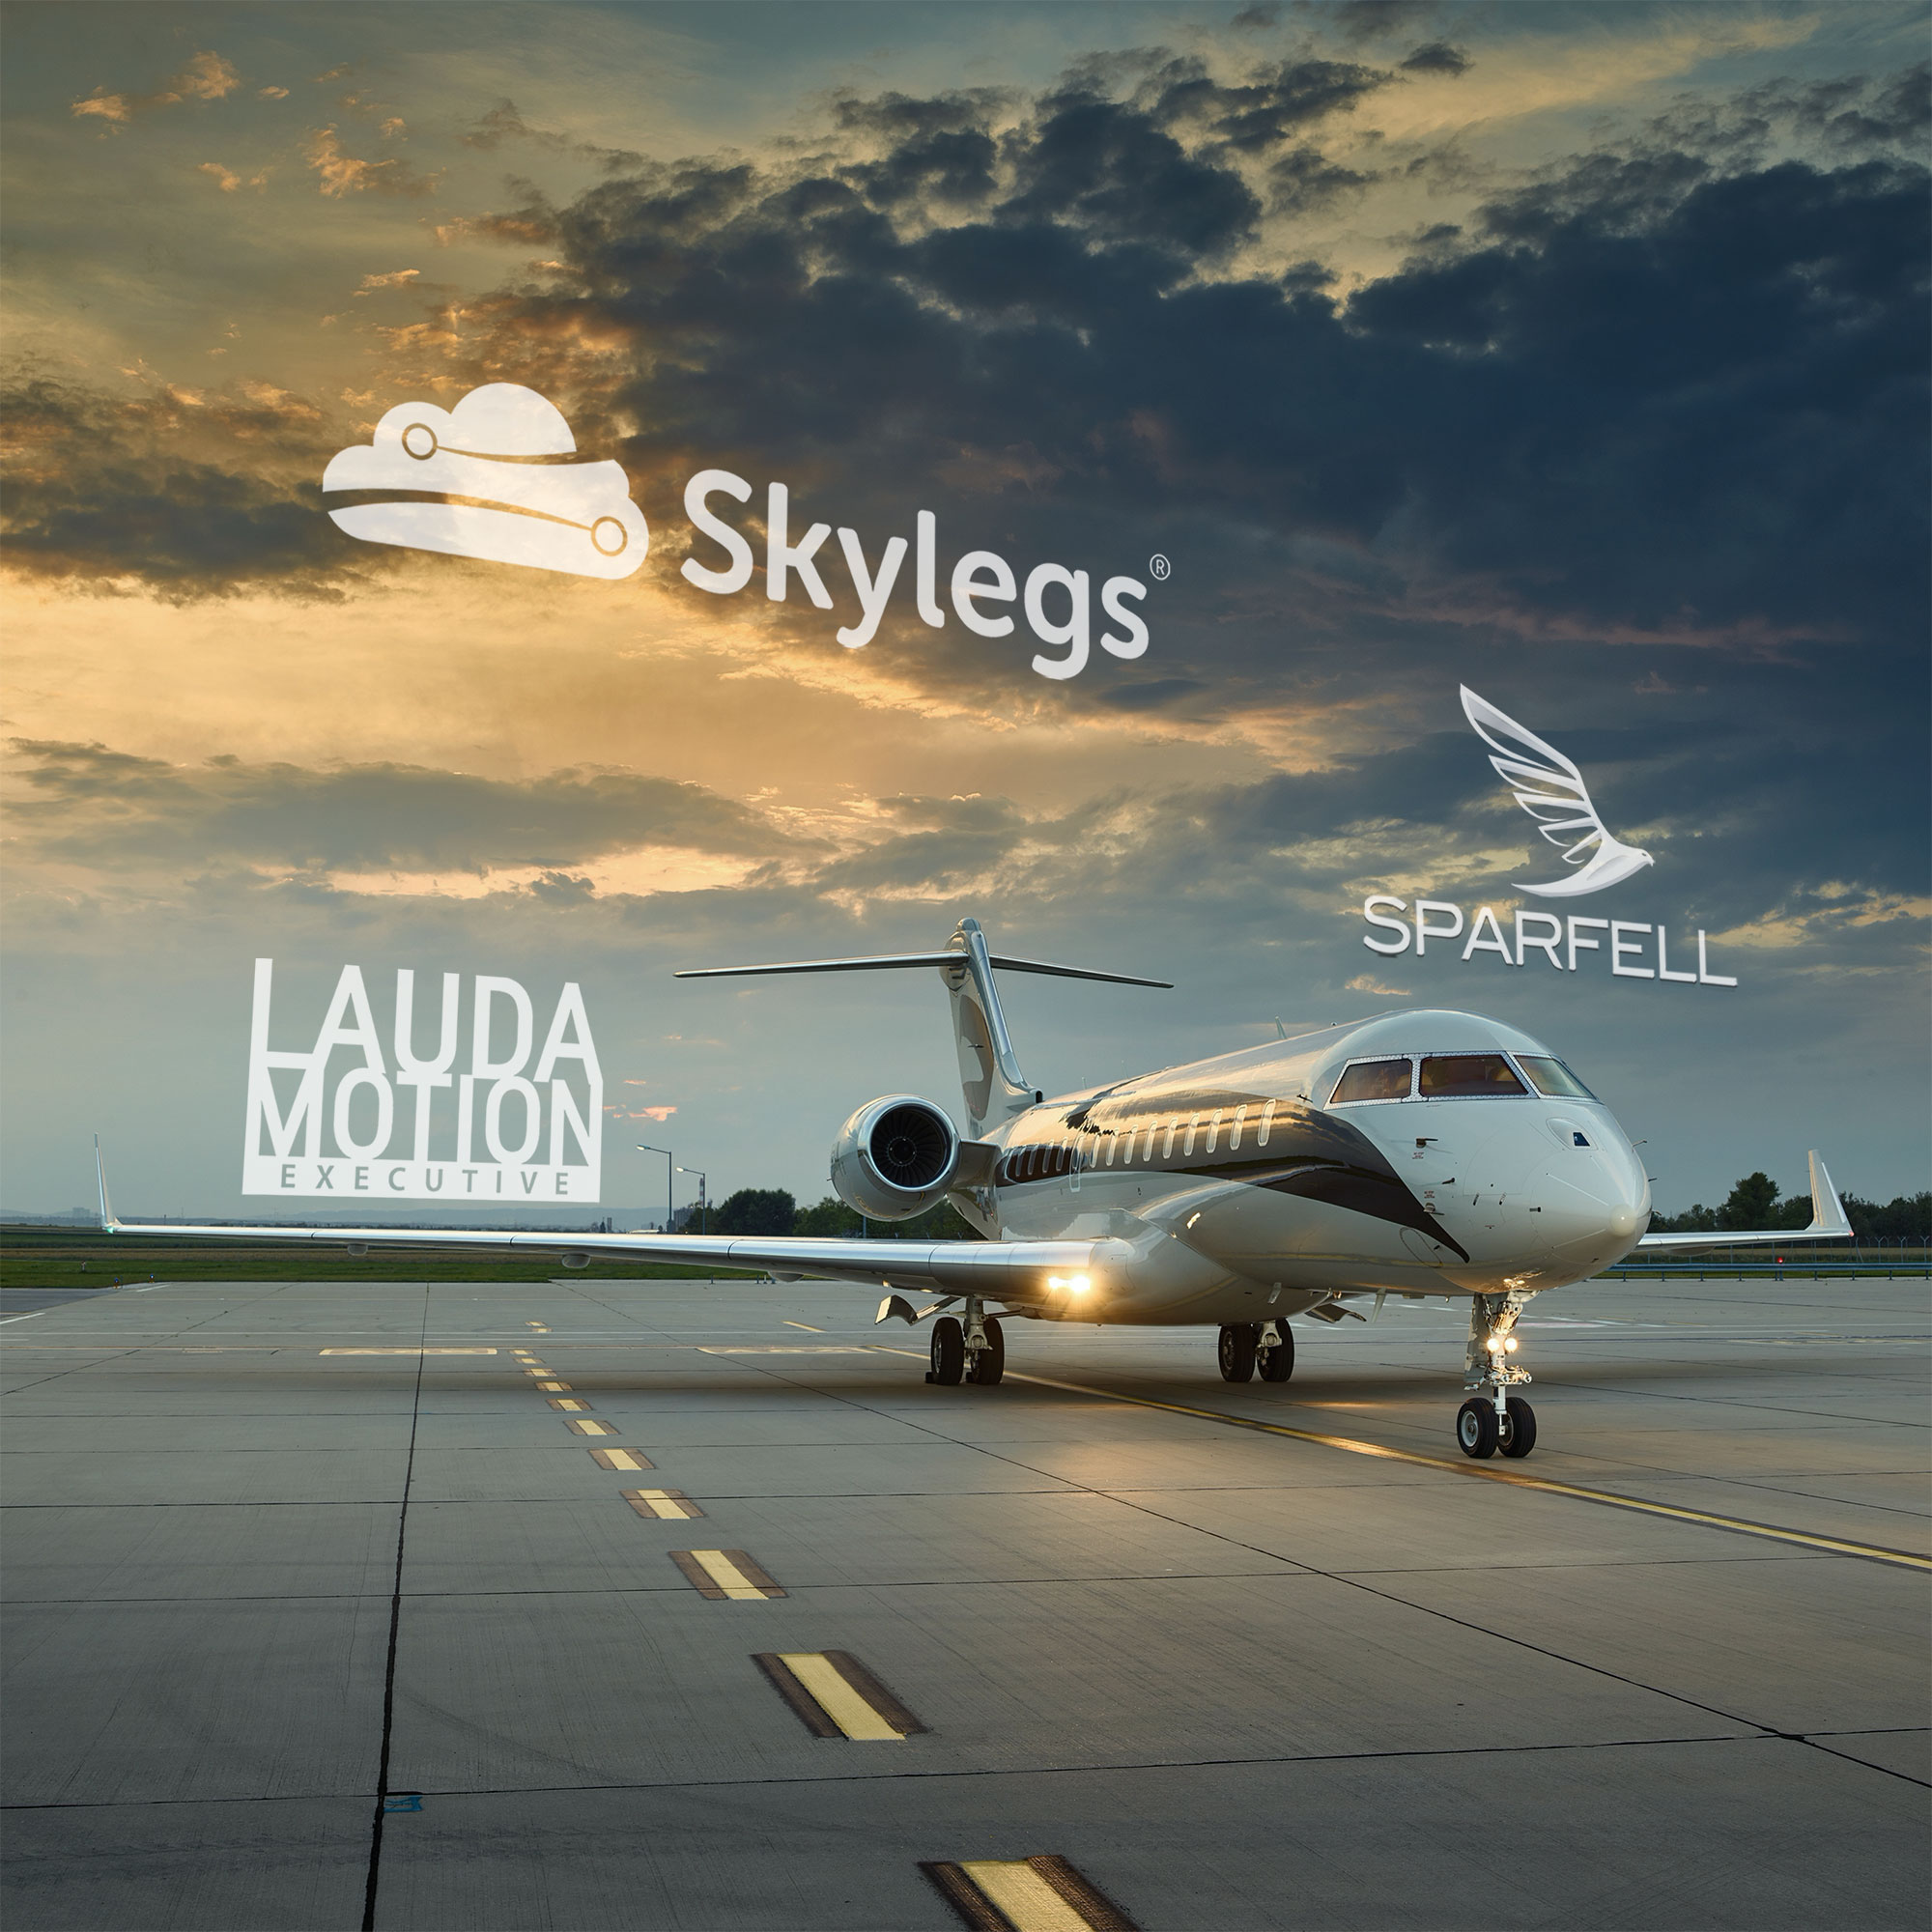 Skylegs - Sparfell and LaudaMotion Executive Implement Skylegs Customised to Their Operations"